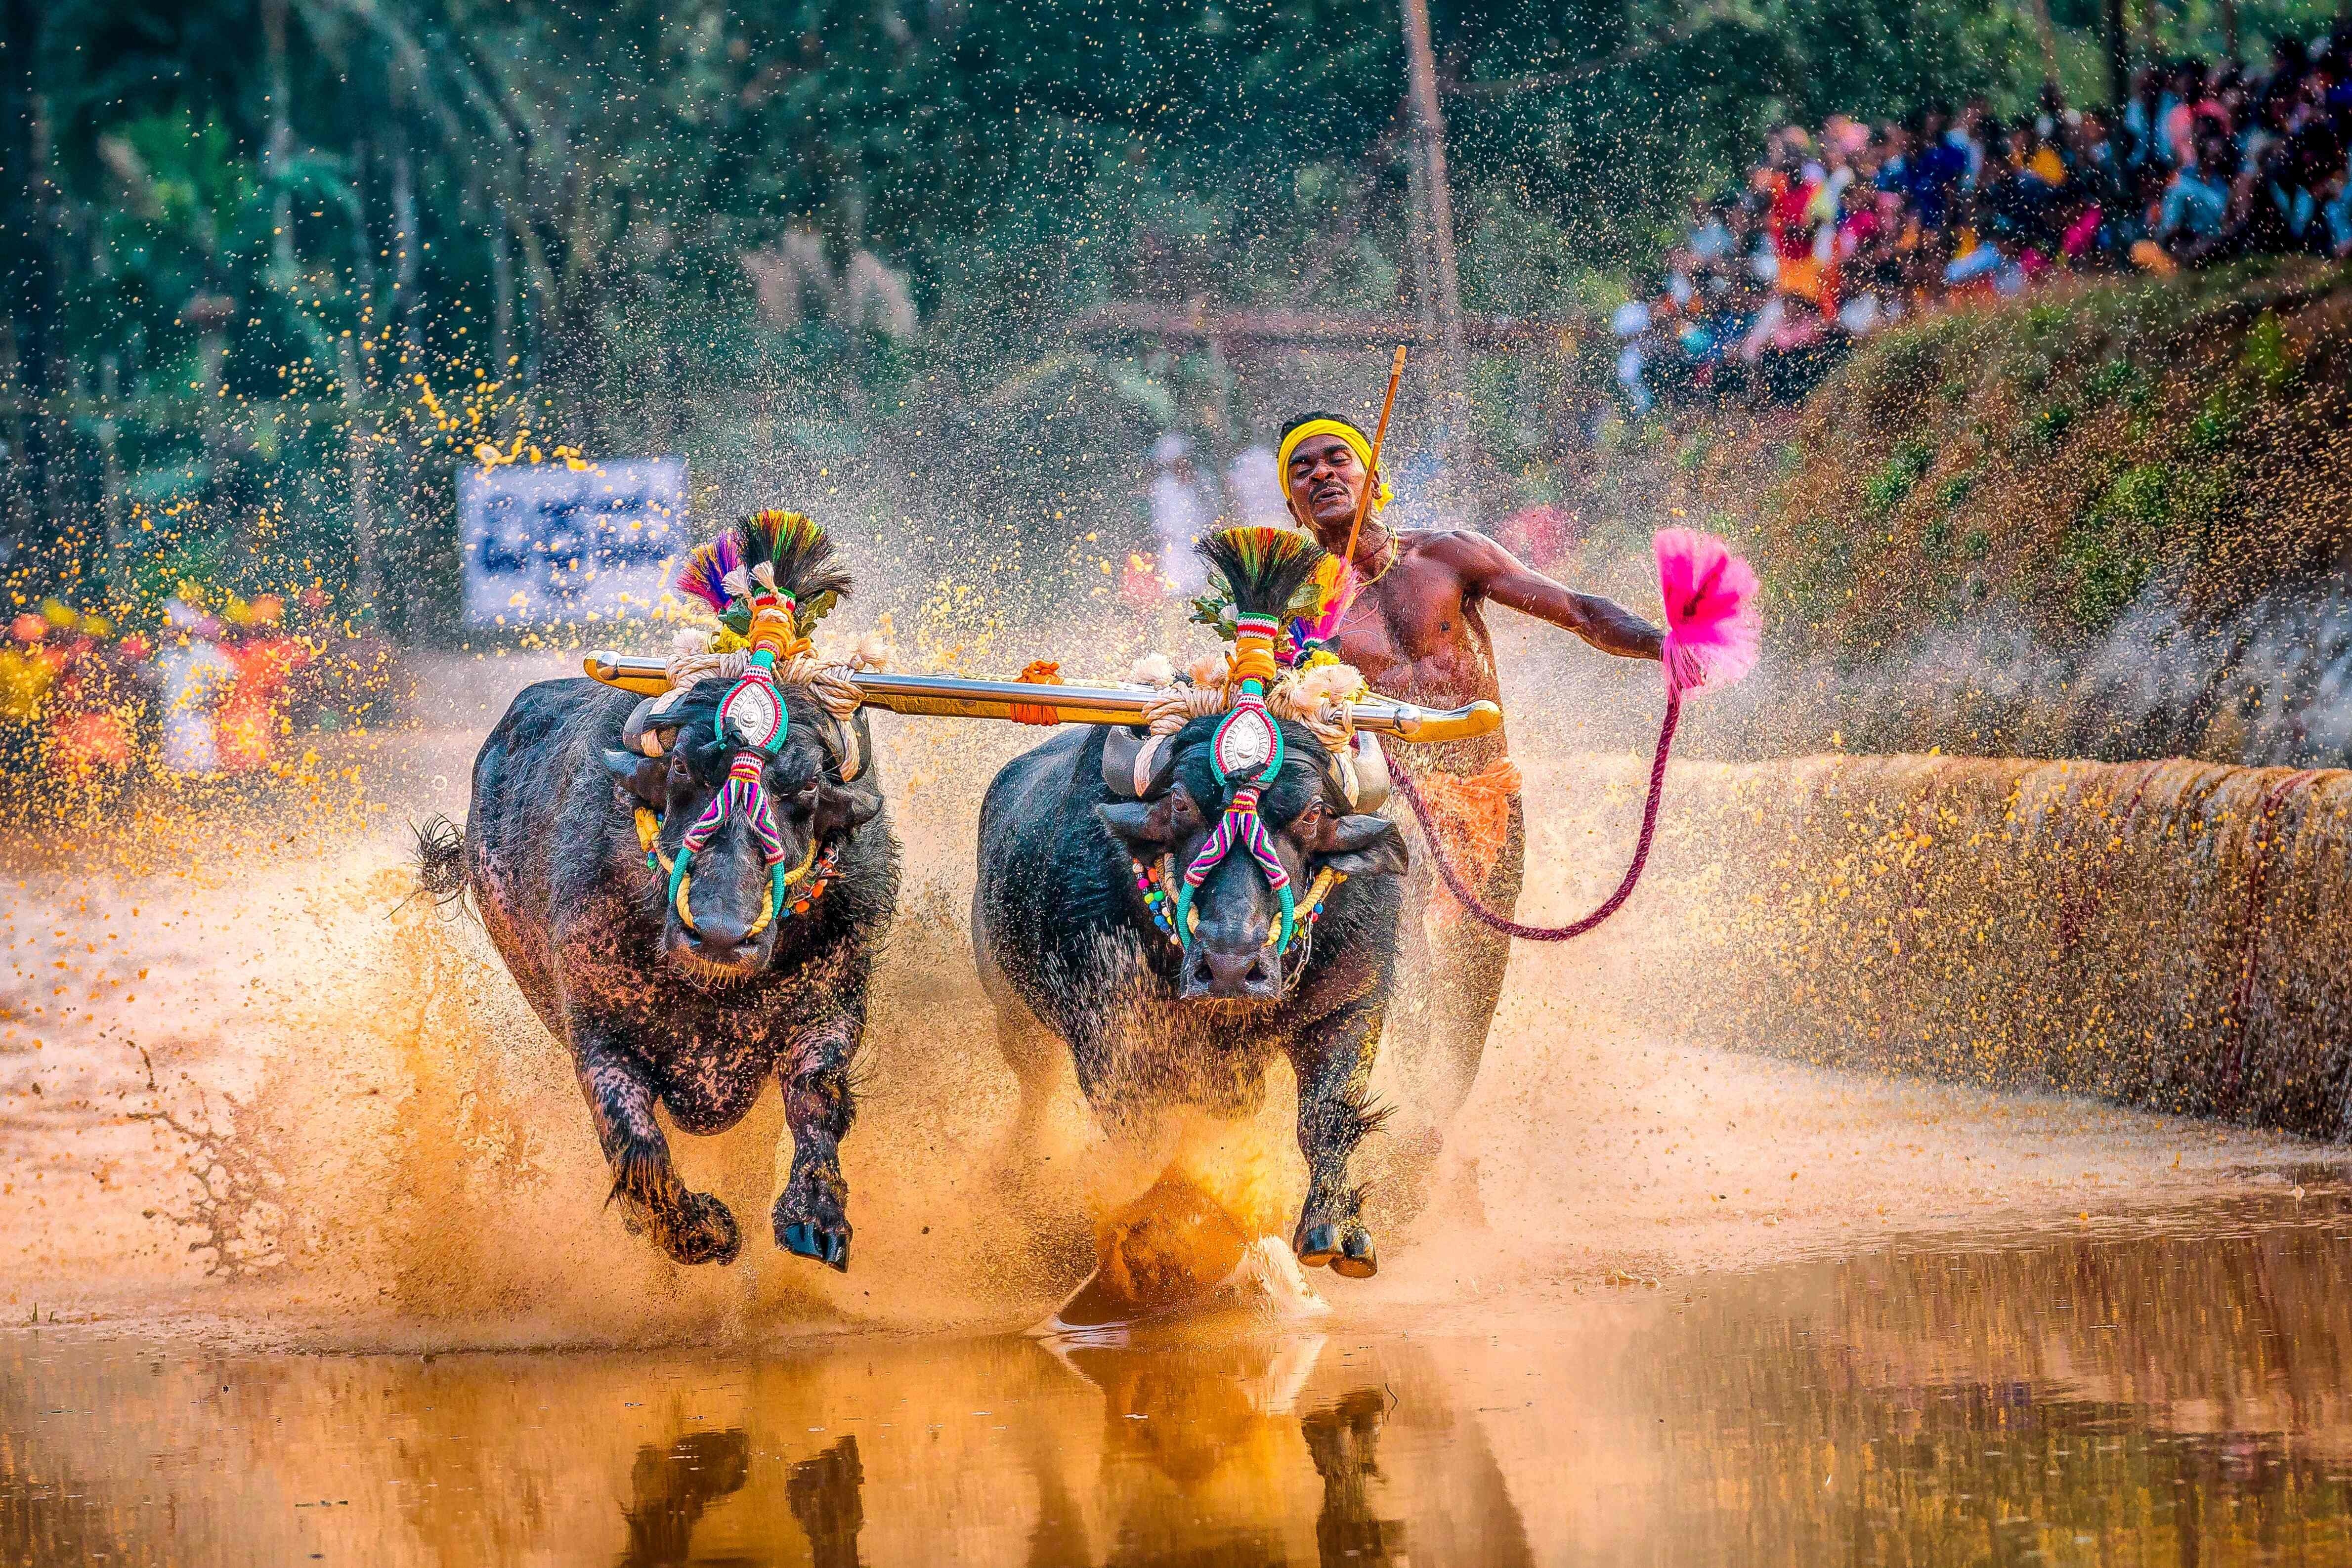 Srinivas Gowda runs alongside his buffaloes during ‘Kambala’, the traditional buffalo racing event in 2020. Photo: AFP